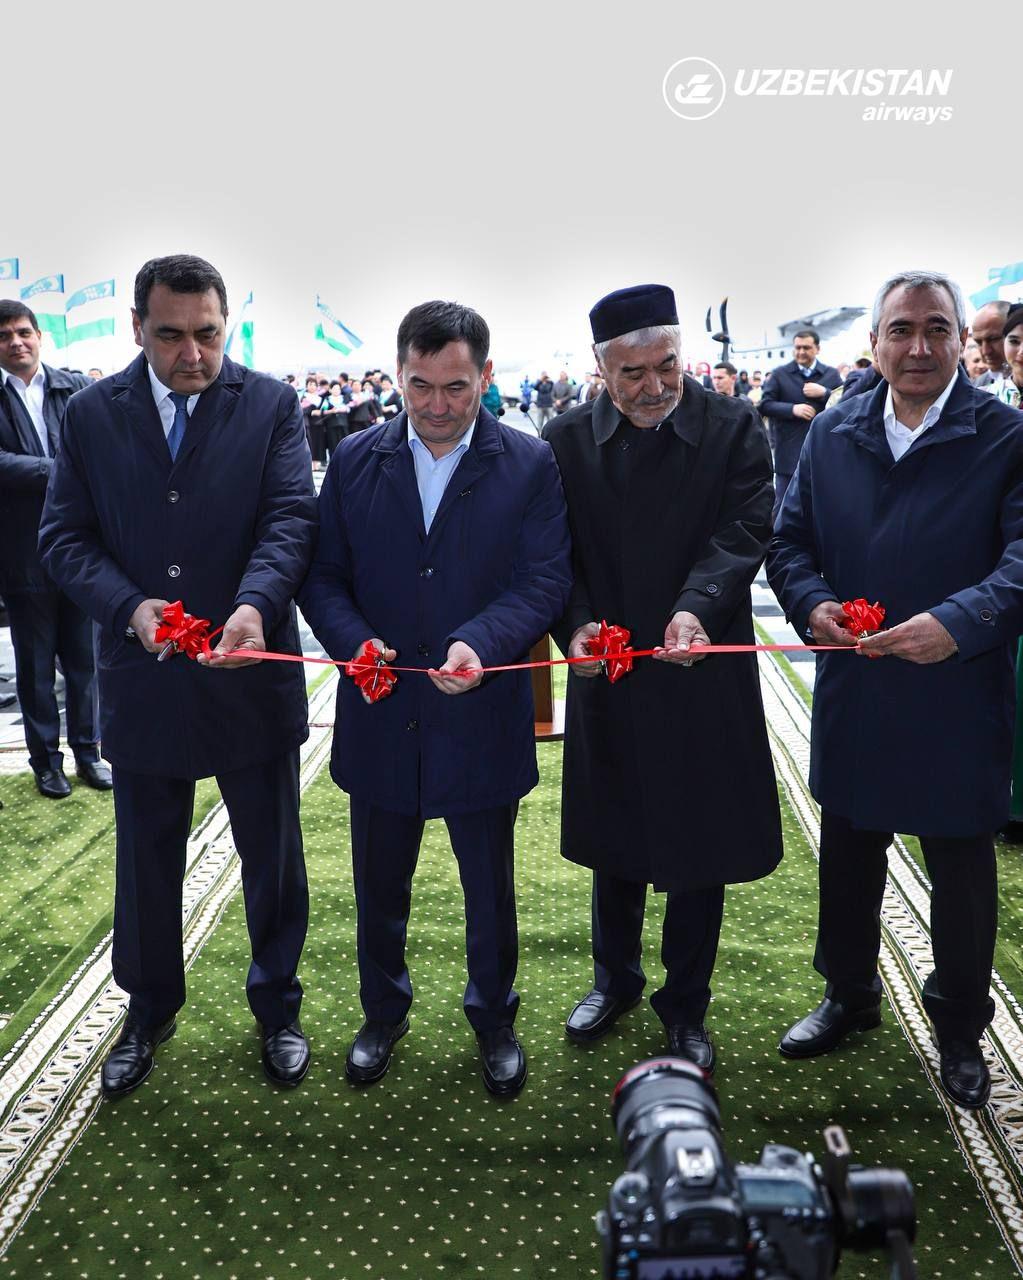 Uzbekistan Airways inaugurated a new airport in Kokand